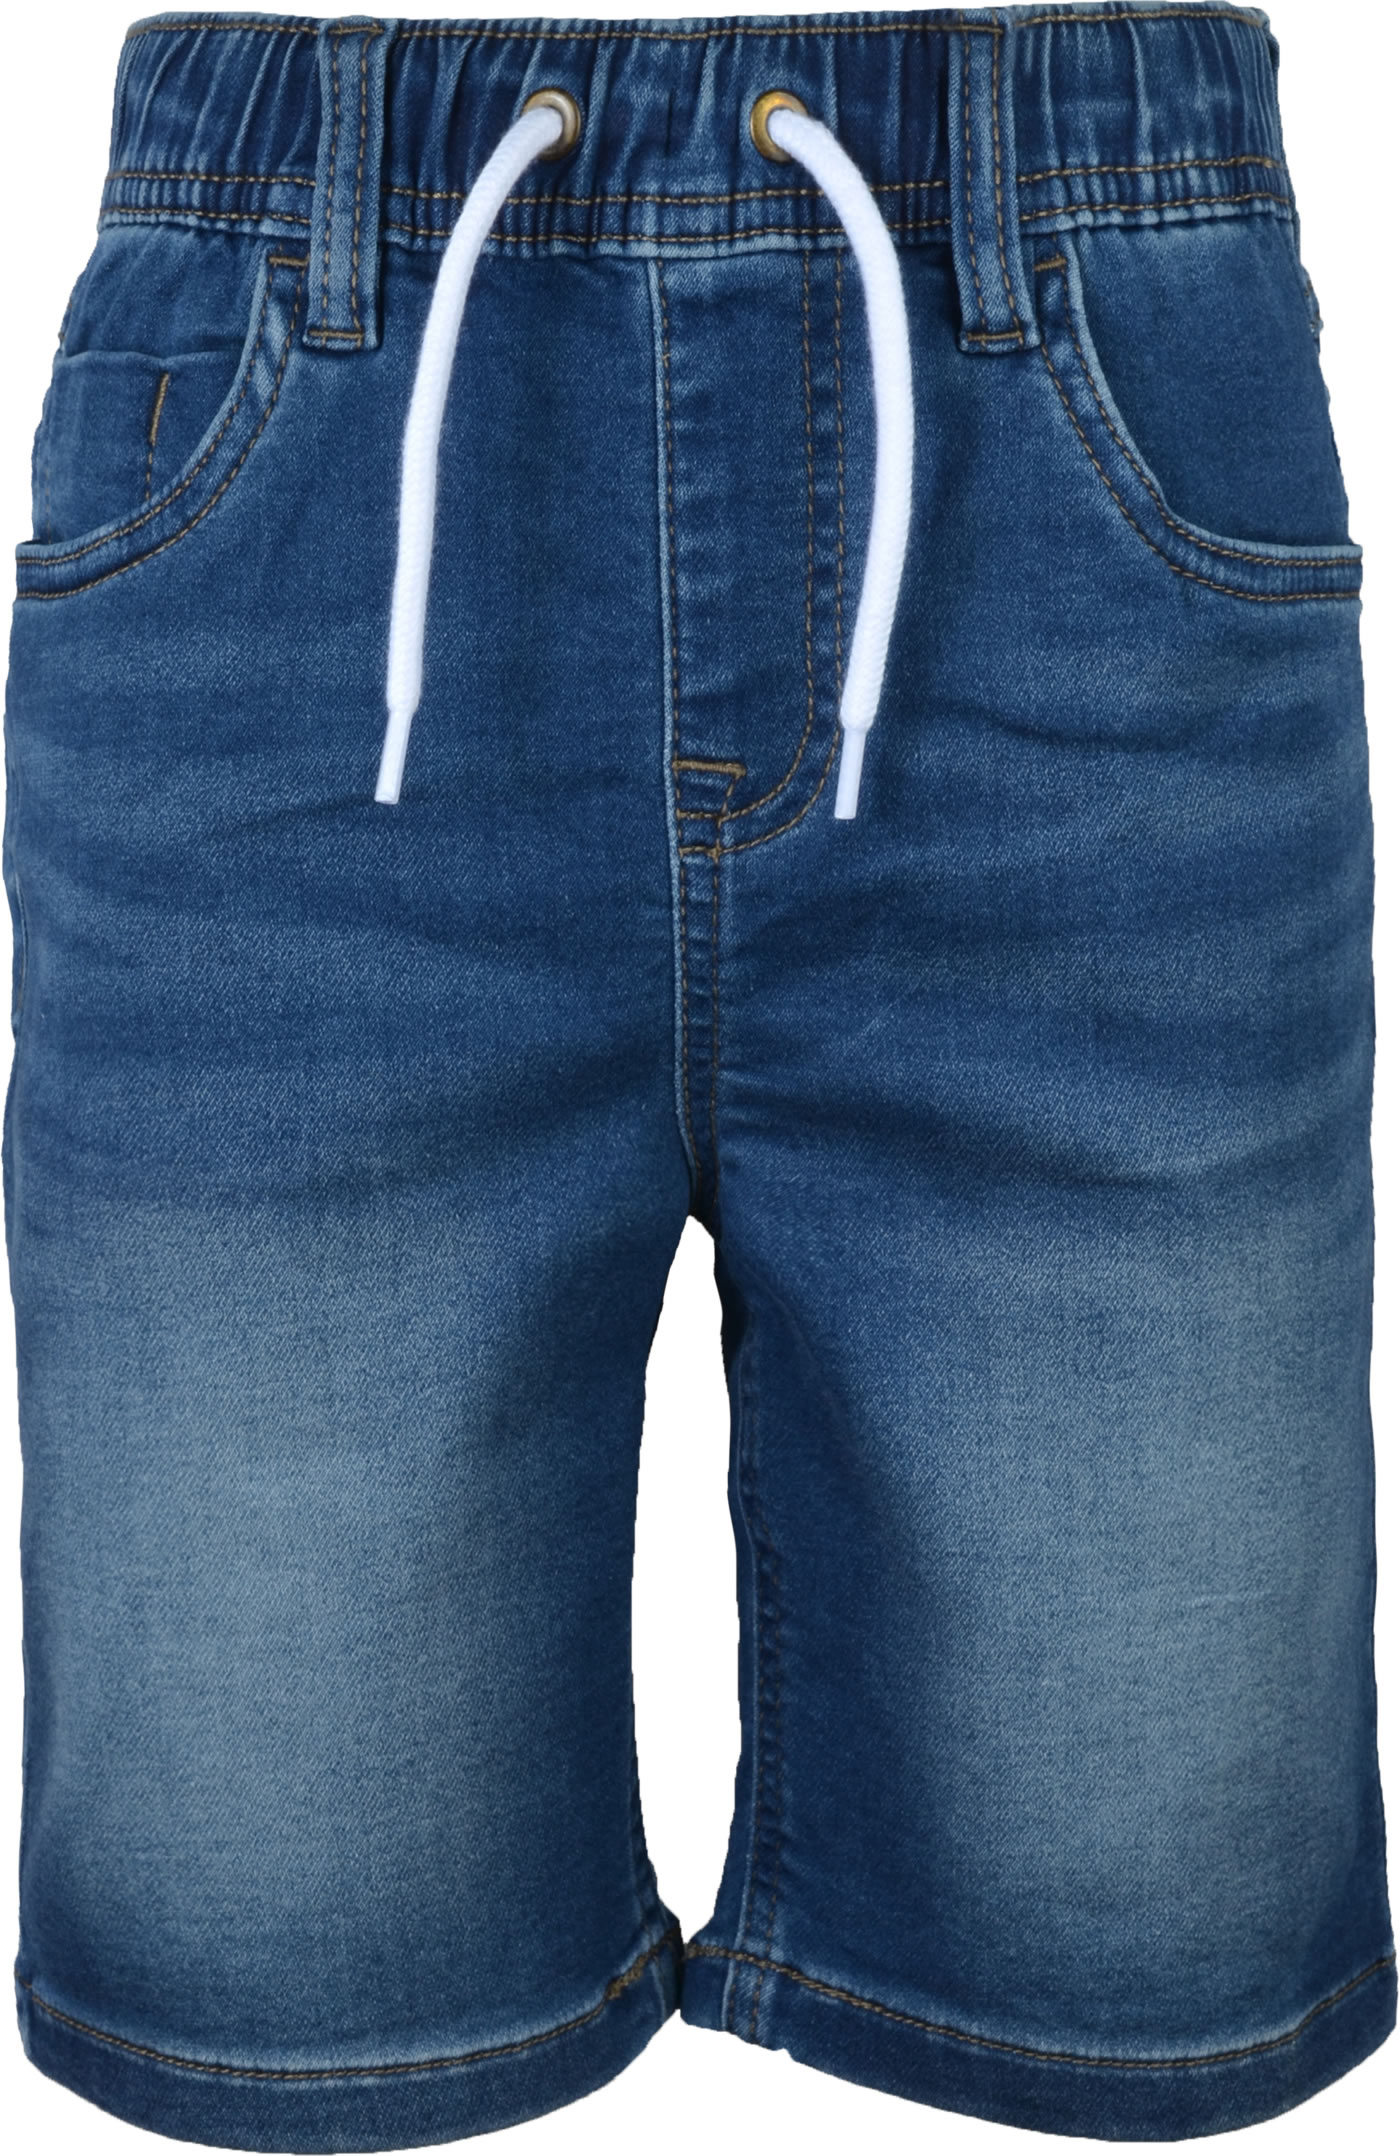 NKMRYAN JOGGER kaufen denim Jeans-Shorts dark name blue it